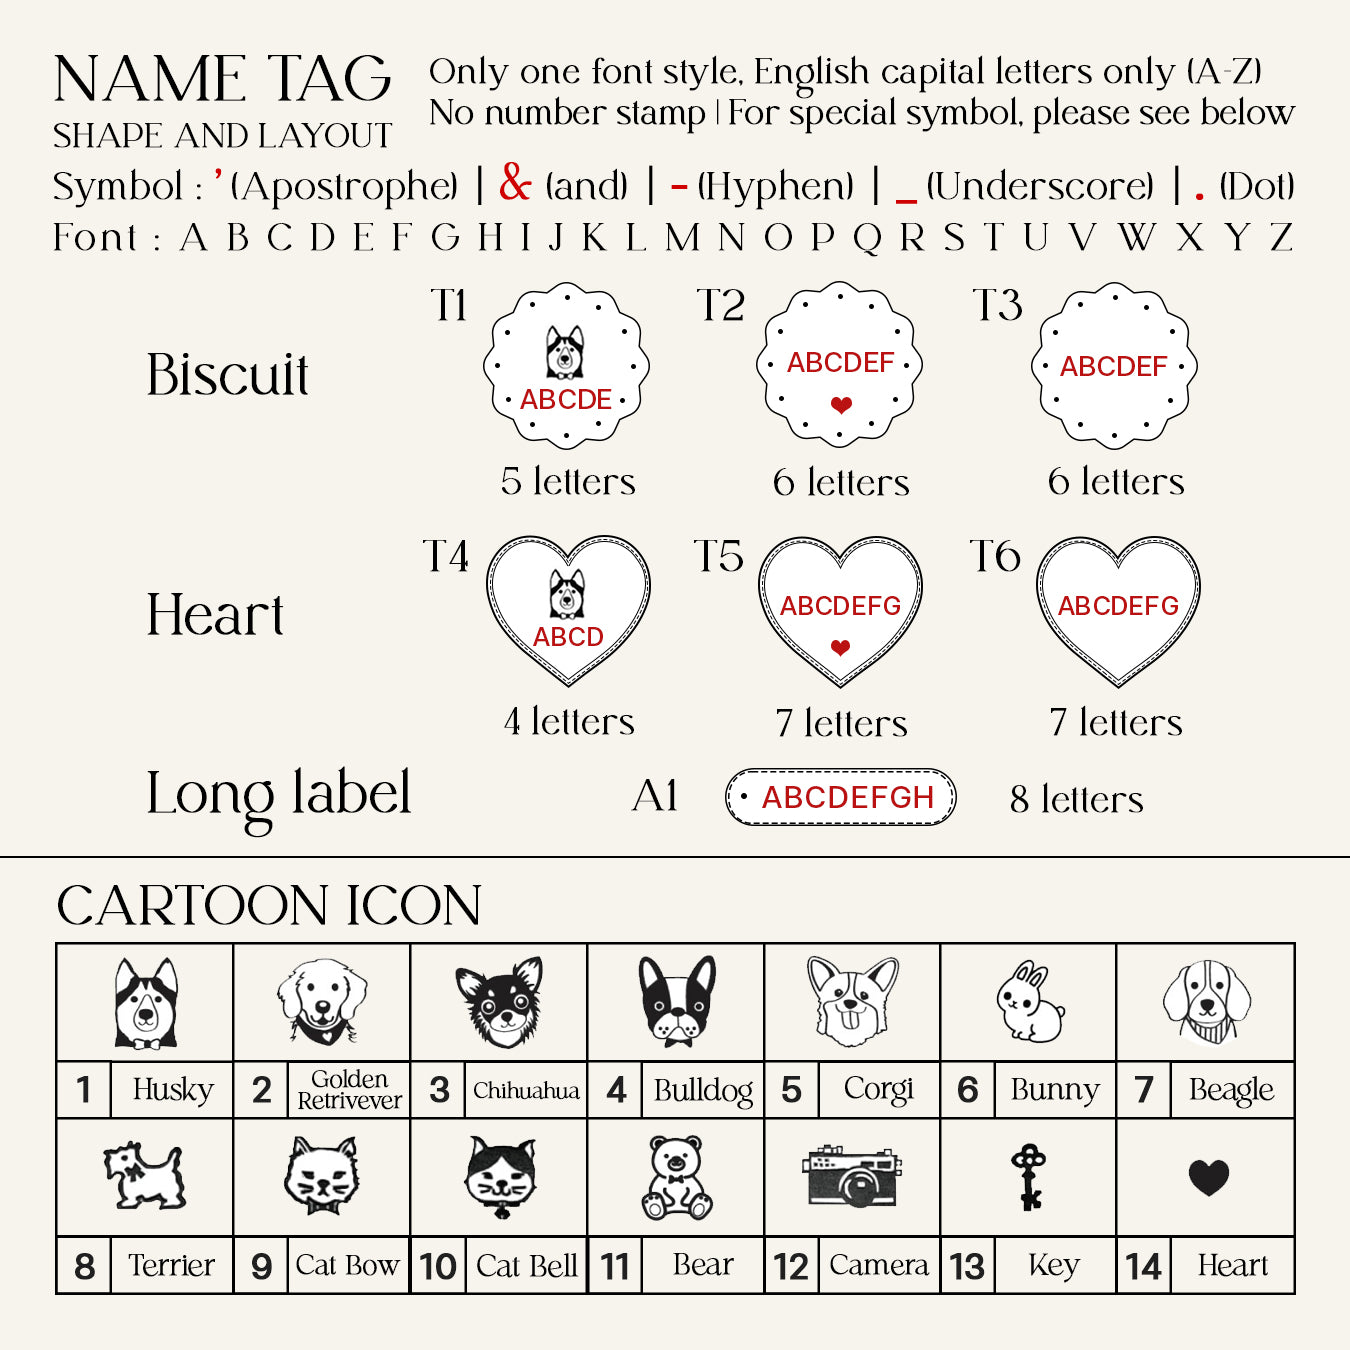 Name Tag - HEART